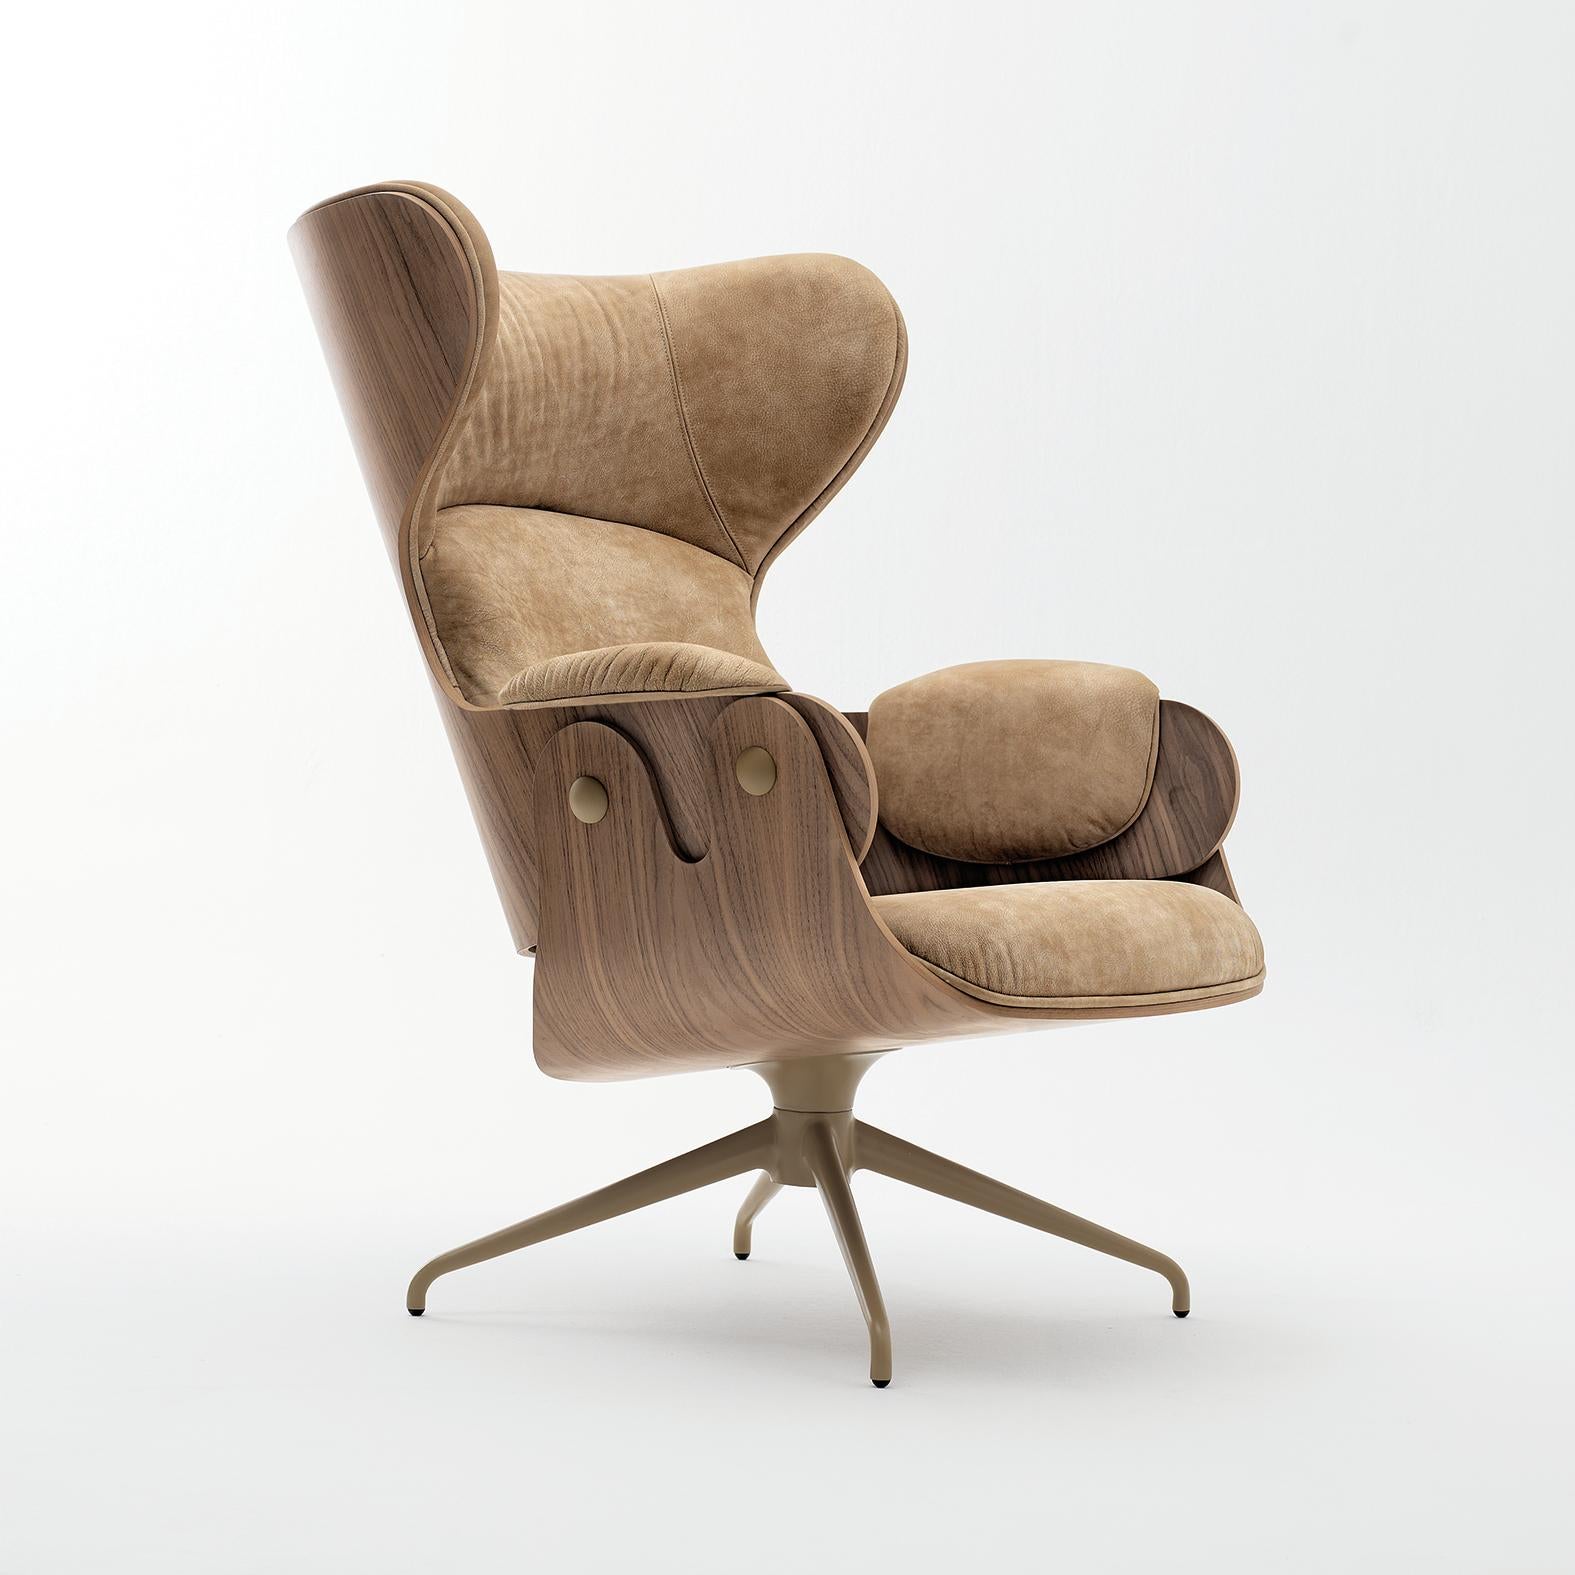 Aluminum Jaime Hayon, Contemporary, Playwood Walnut Leather Upholstery Lounger Armchair 